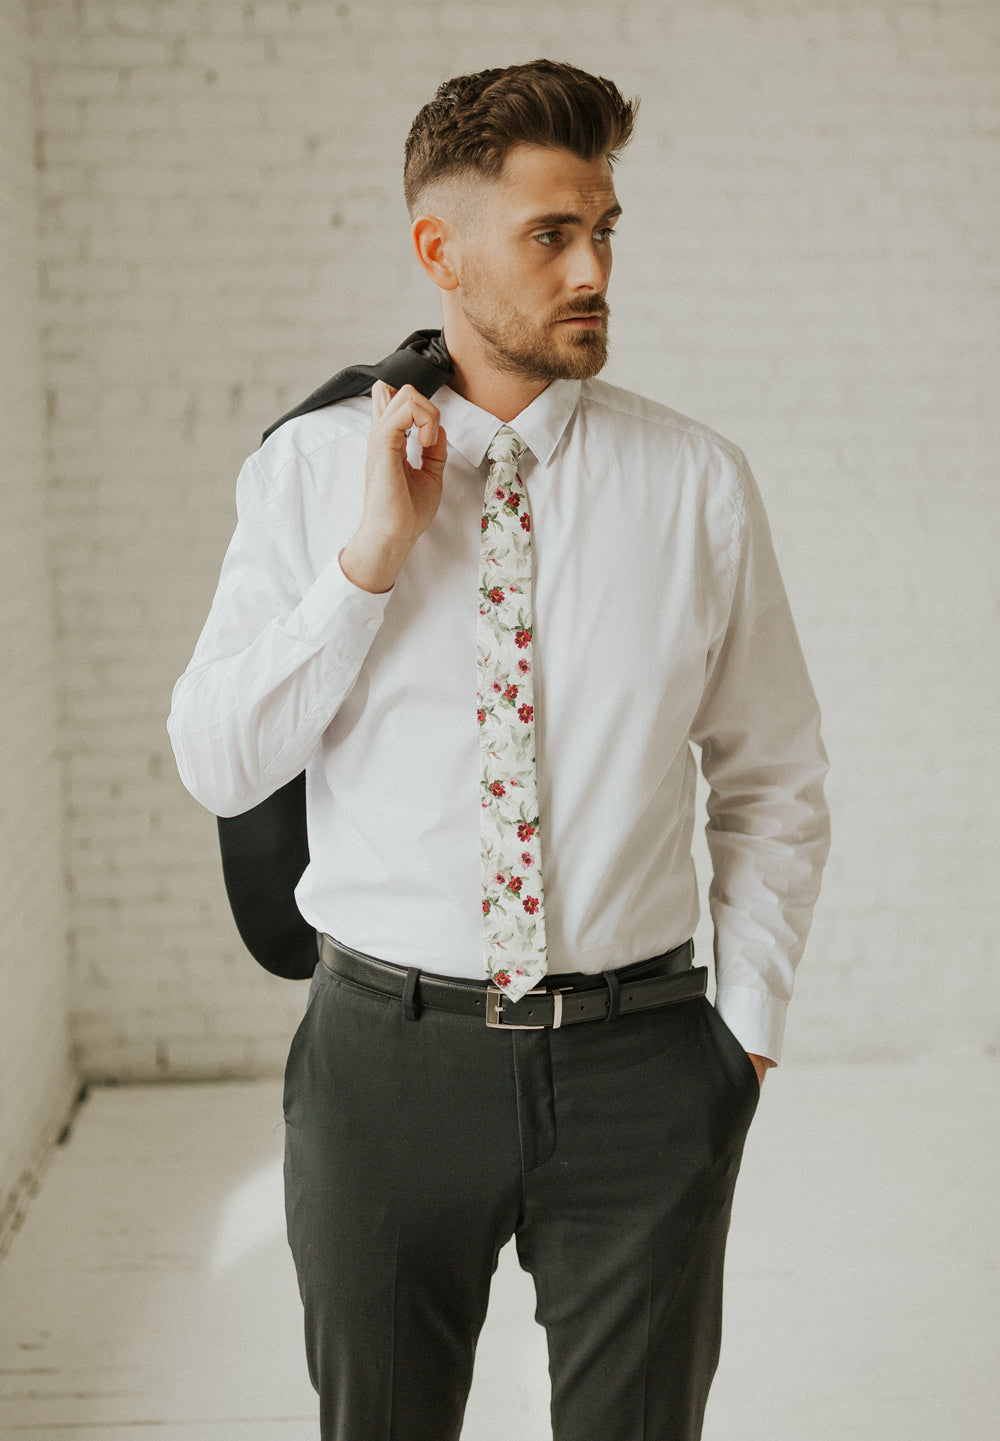 Wearing a white shirt, a black tie, gray pants, holding - stock photo  4083021 | Crushpixel